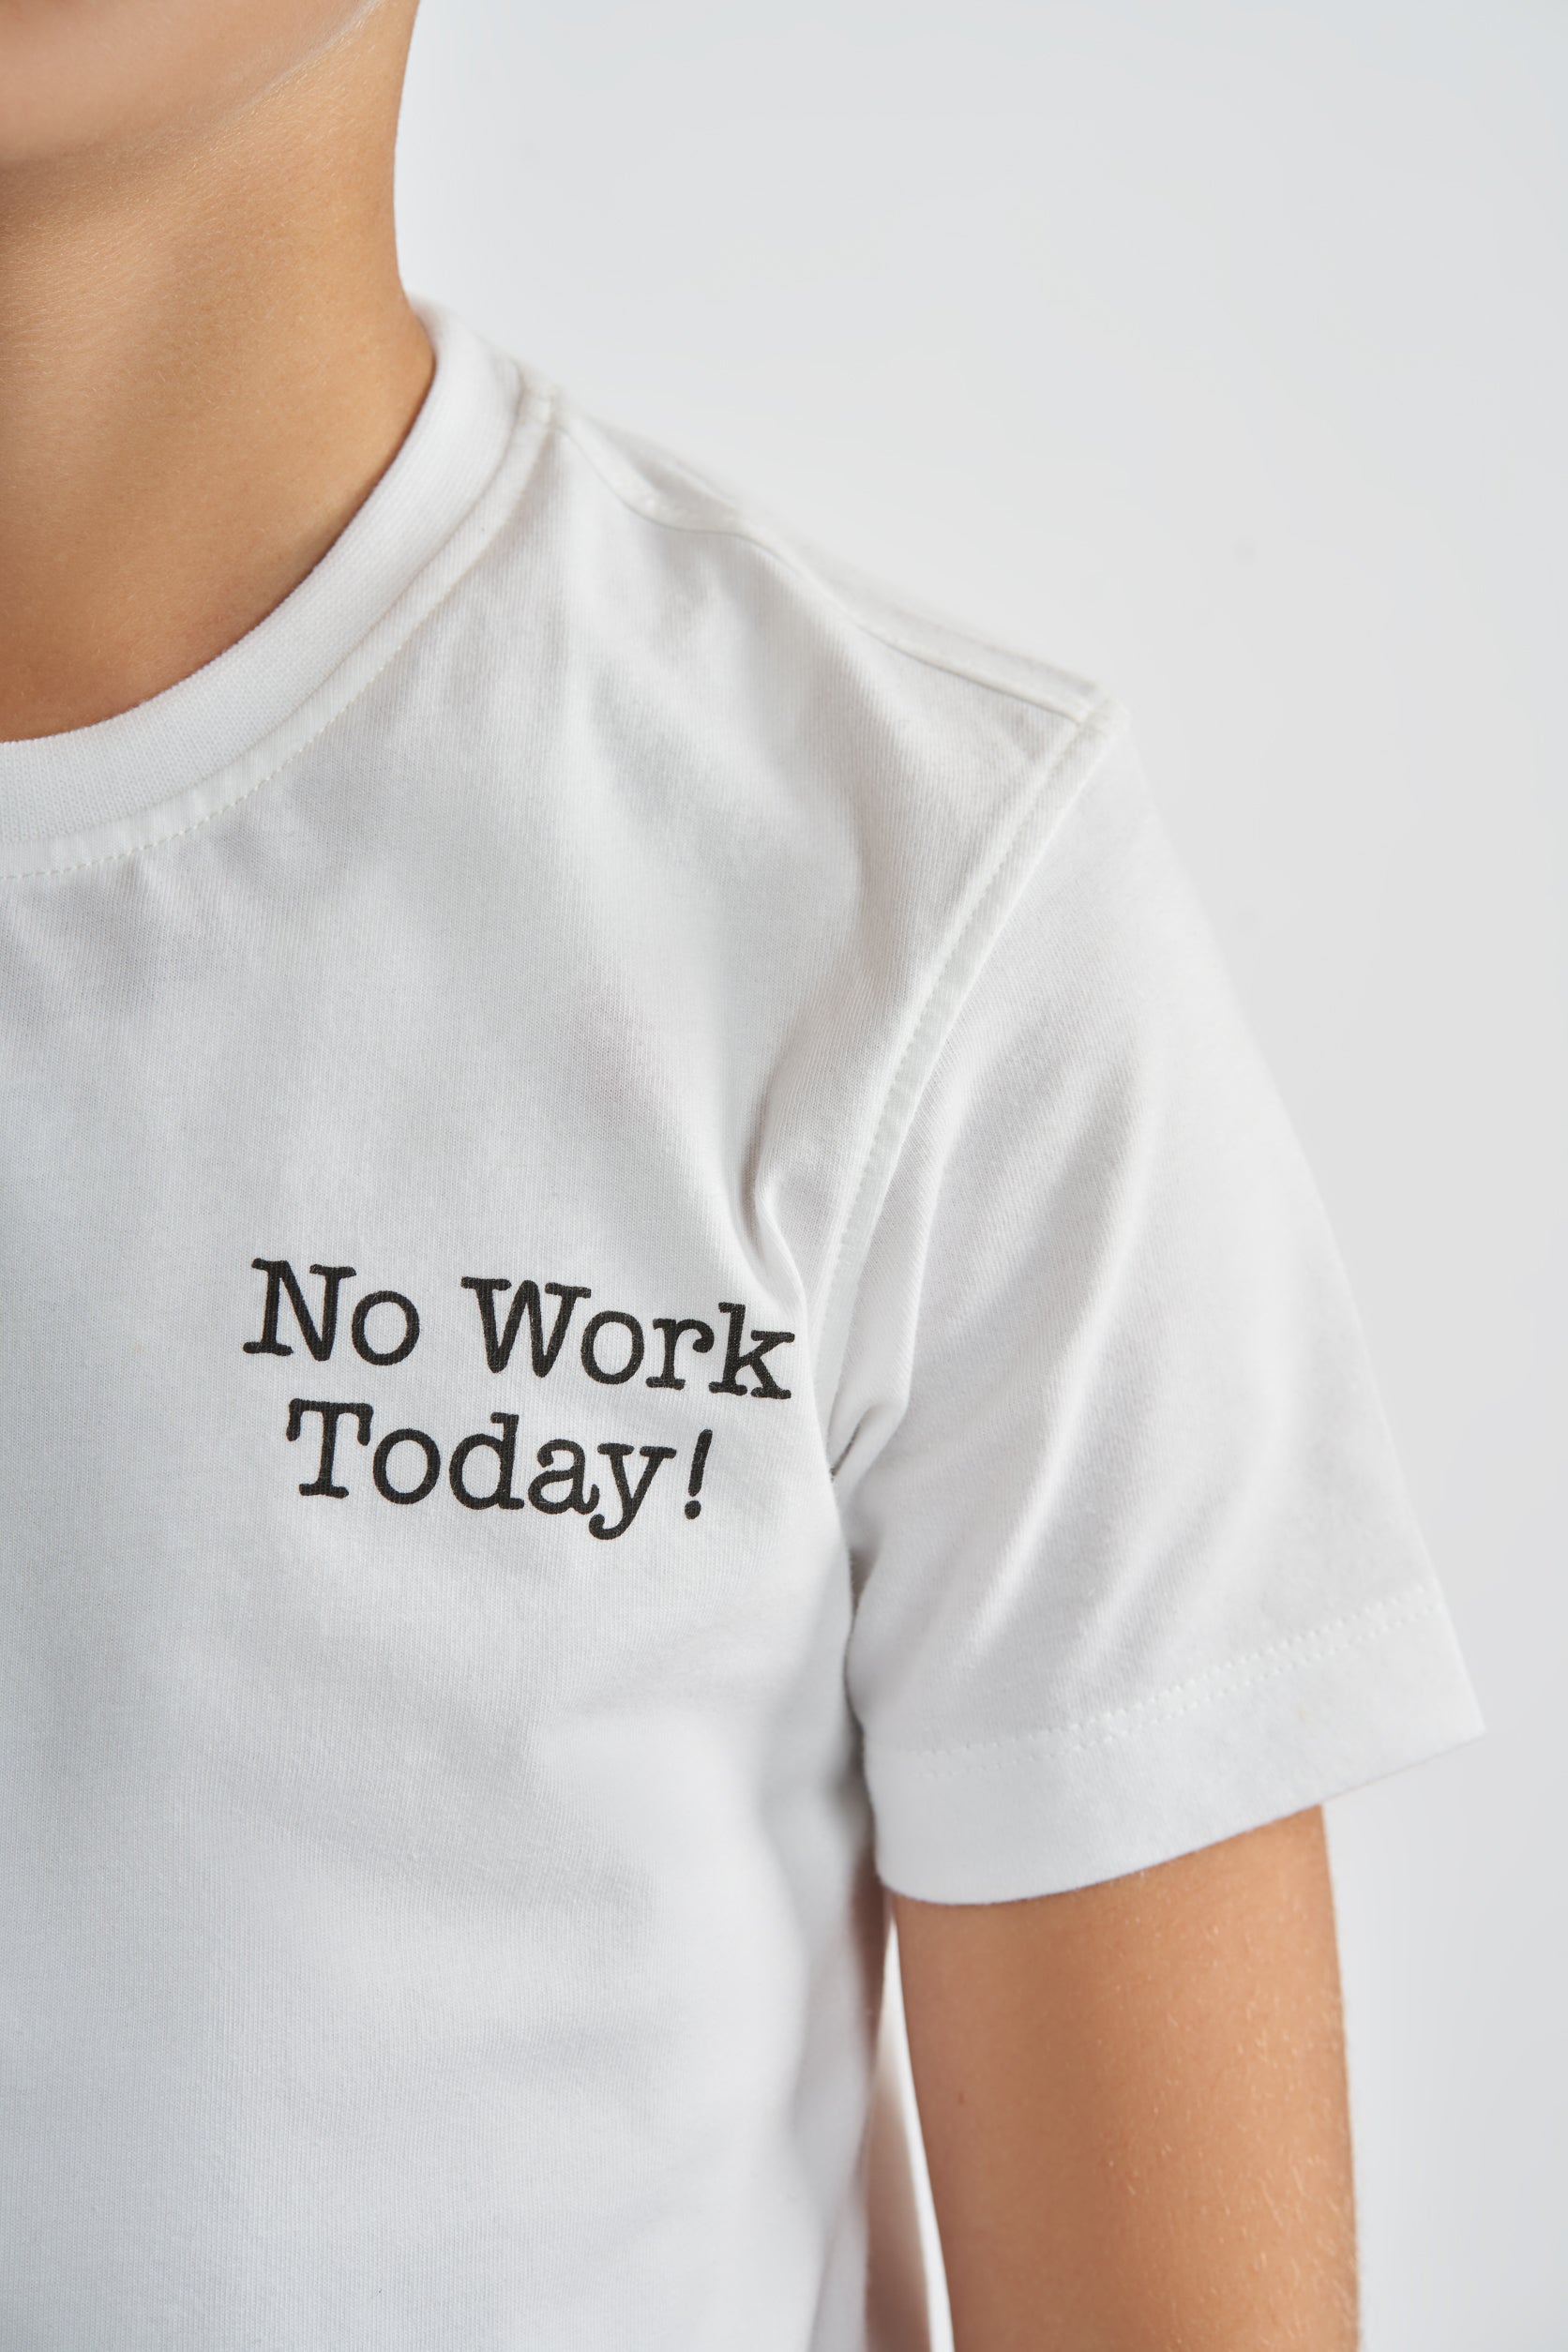 "No Work Today!" Printed White T-Shirt